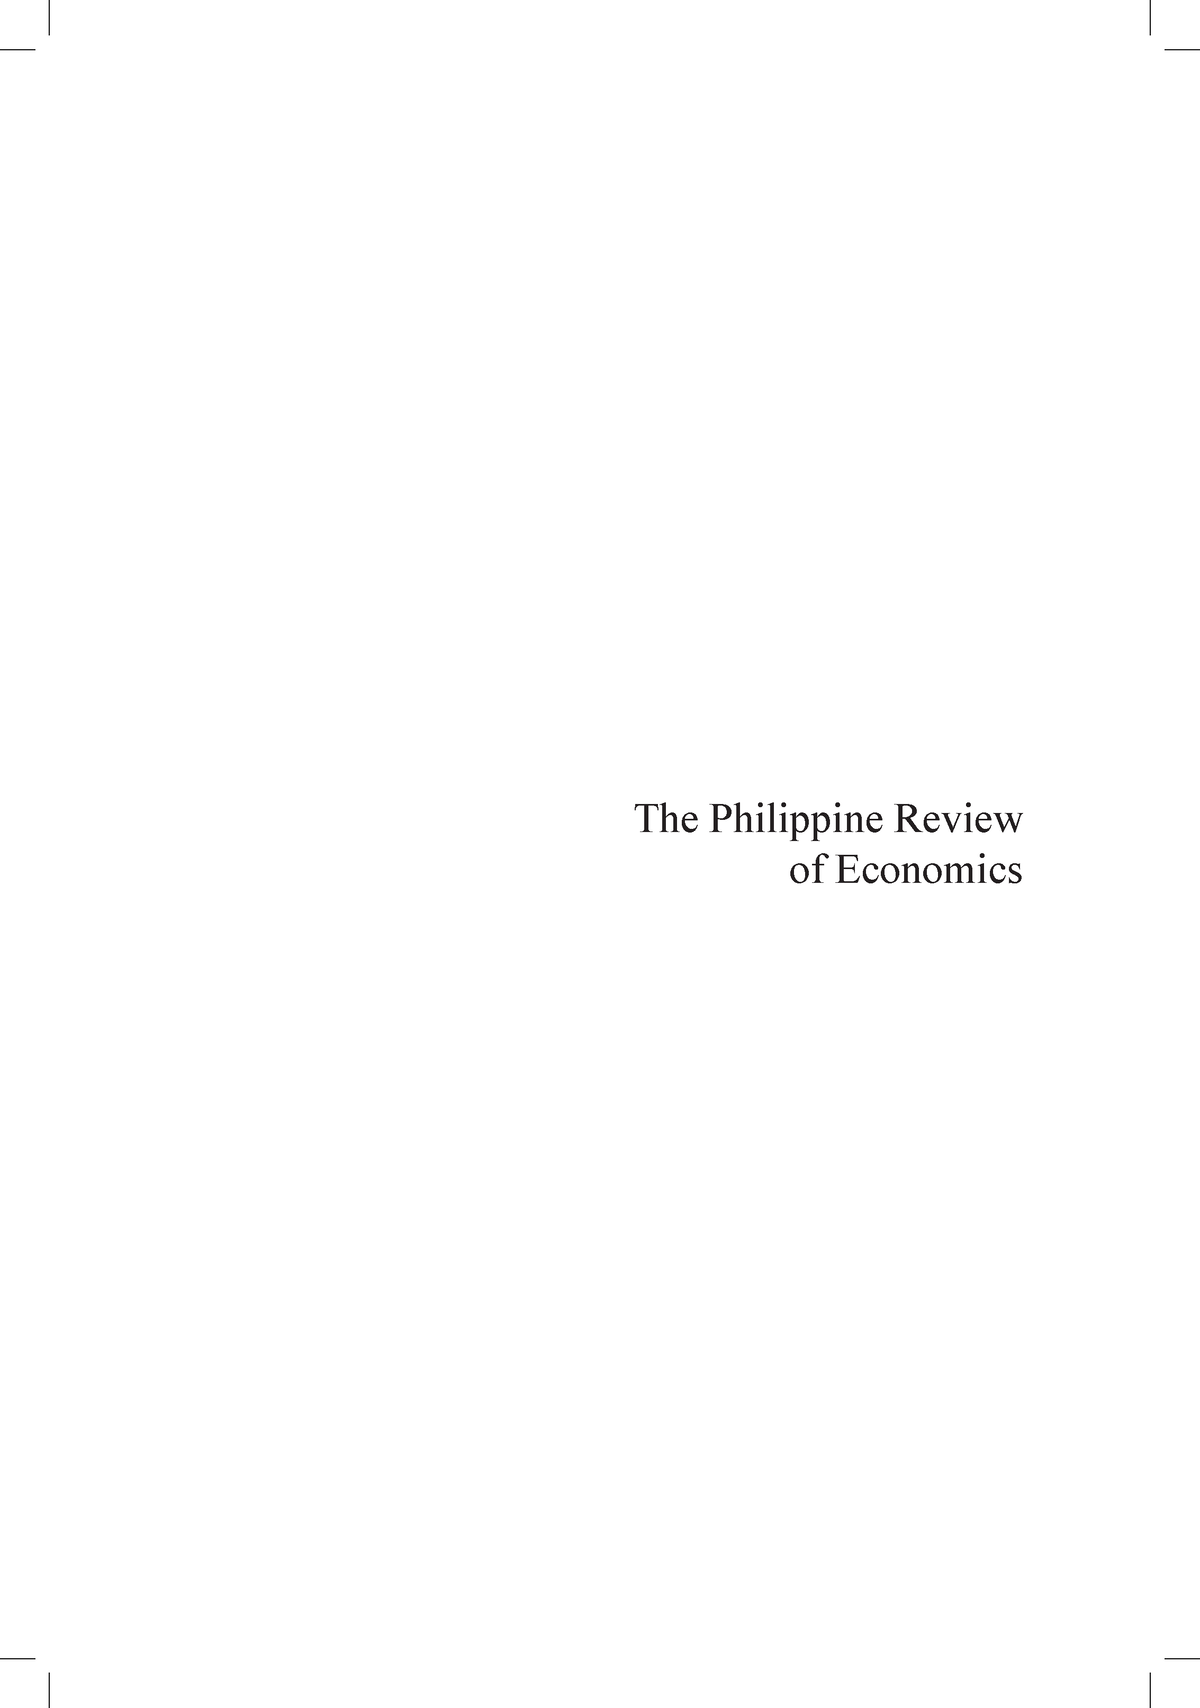 573 660 1 PB - AAAAAA - The Philippine Review of Economics The ...